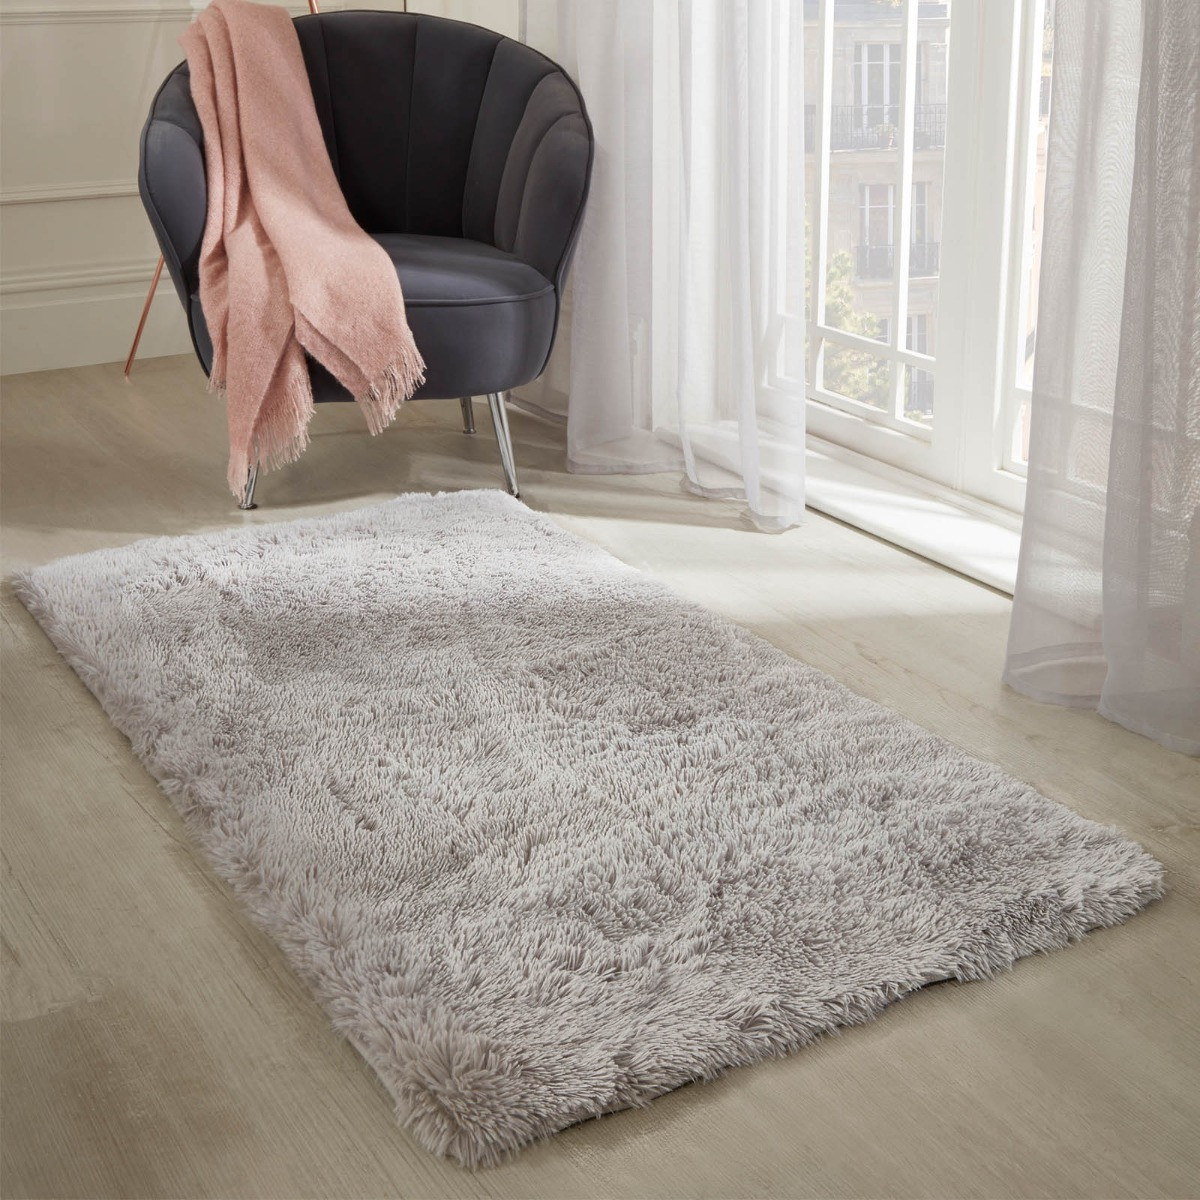 Sienna Soft Fluffy Rug Anti-Slip Plain Shaggy Floor Mat, Silver - 160 x 230cm>